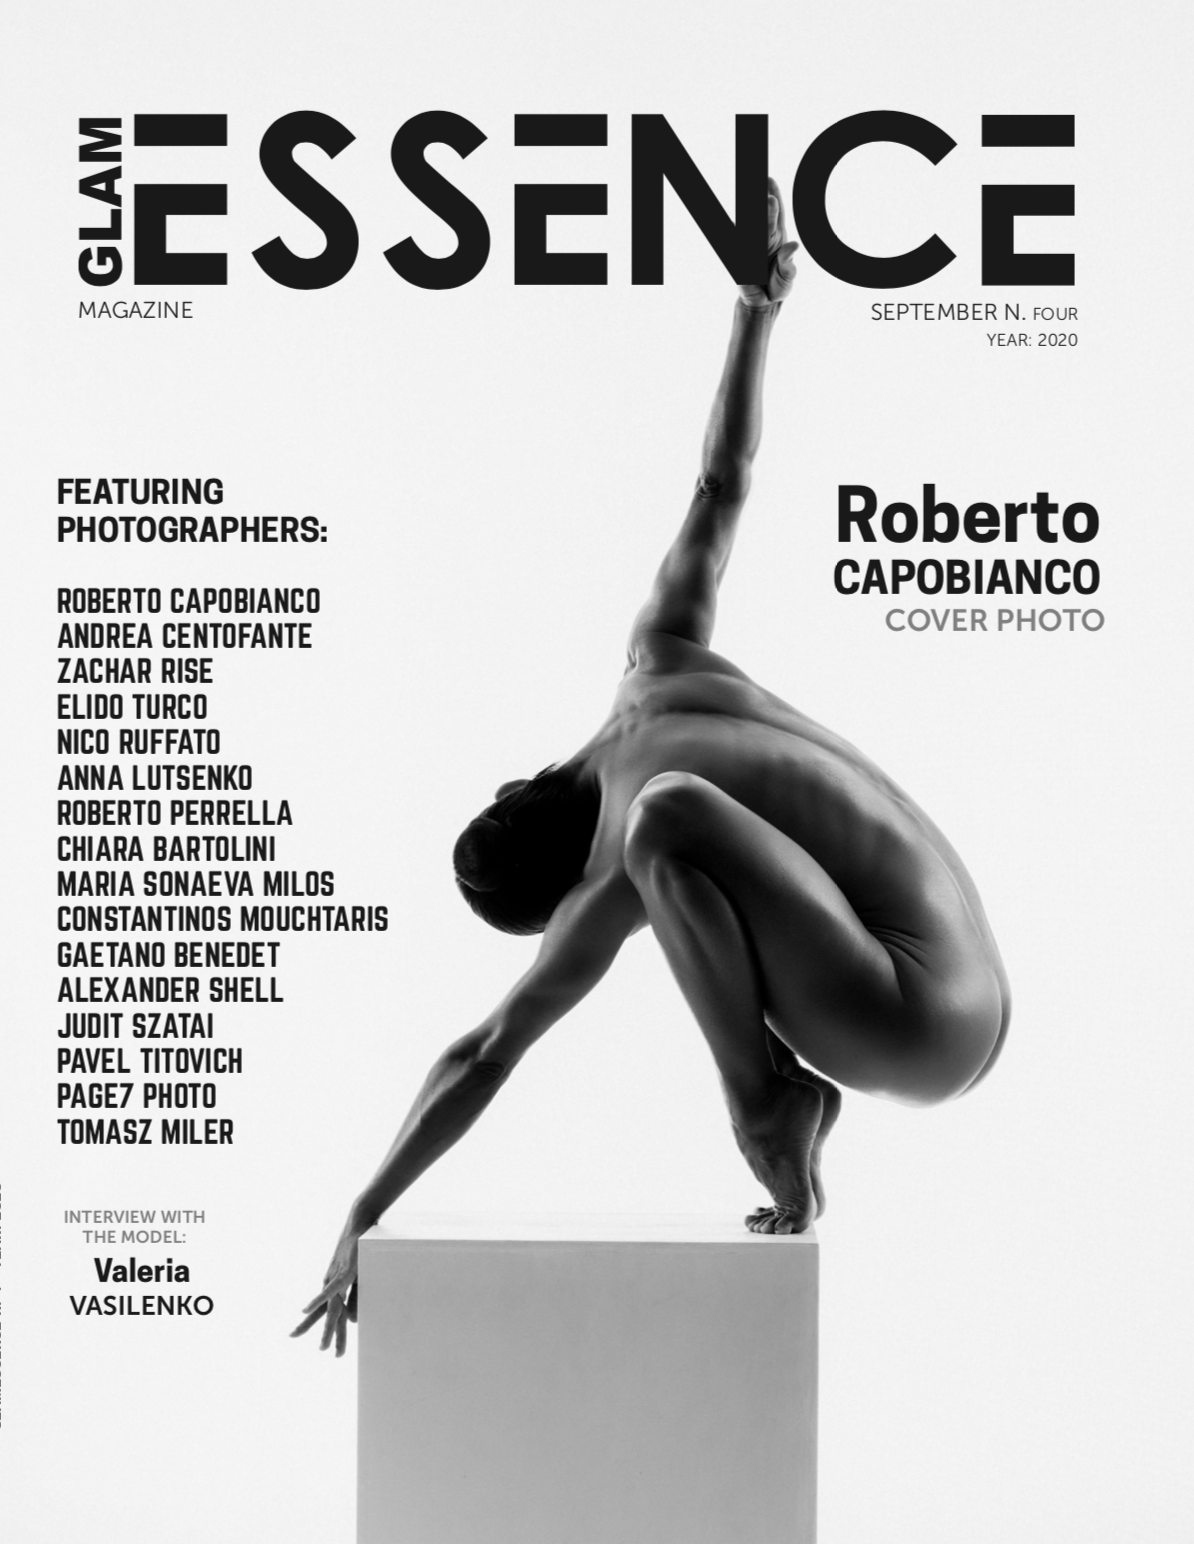 Glam Essence Magazine September 2020 0- Cover by Roberto Capobianco